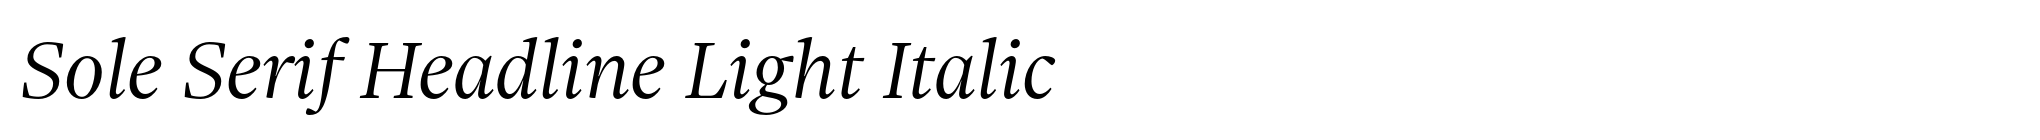 Sole Serif Headline Light Italic image